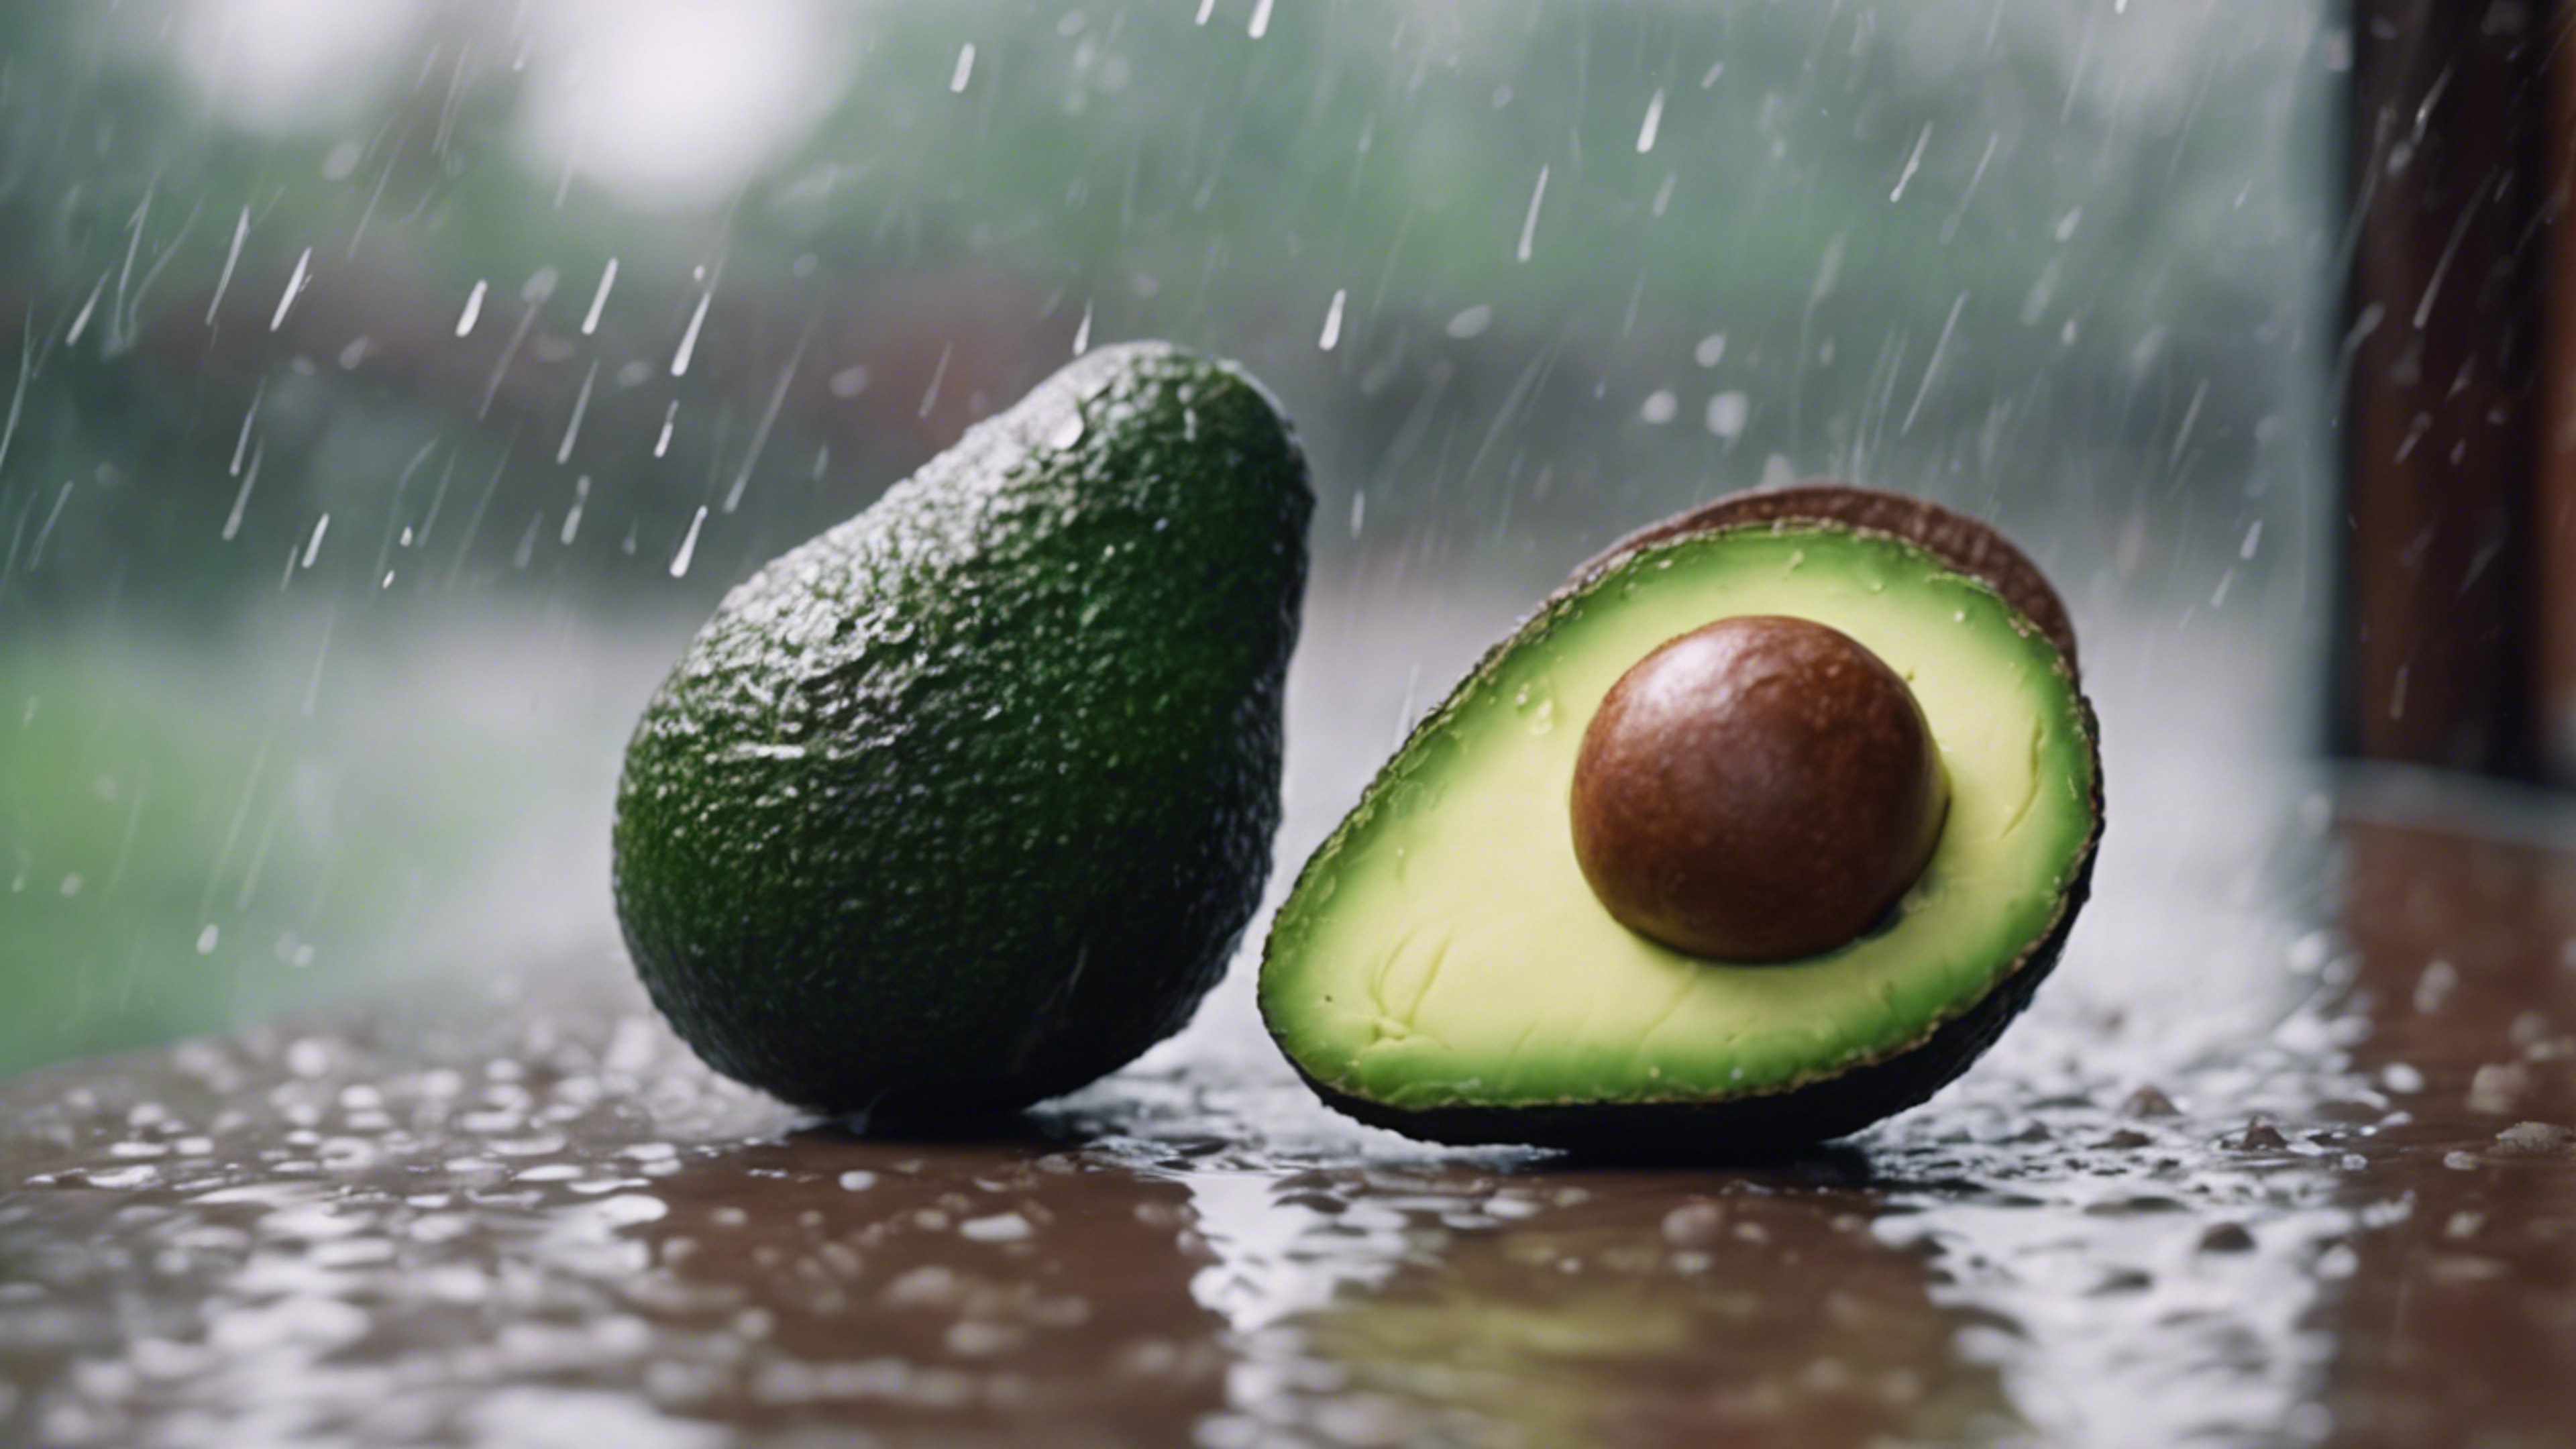 An adorable avocado in a quiet reflection on a rainy day Tapeta[1229e2b9e9634c7f8c86]